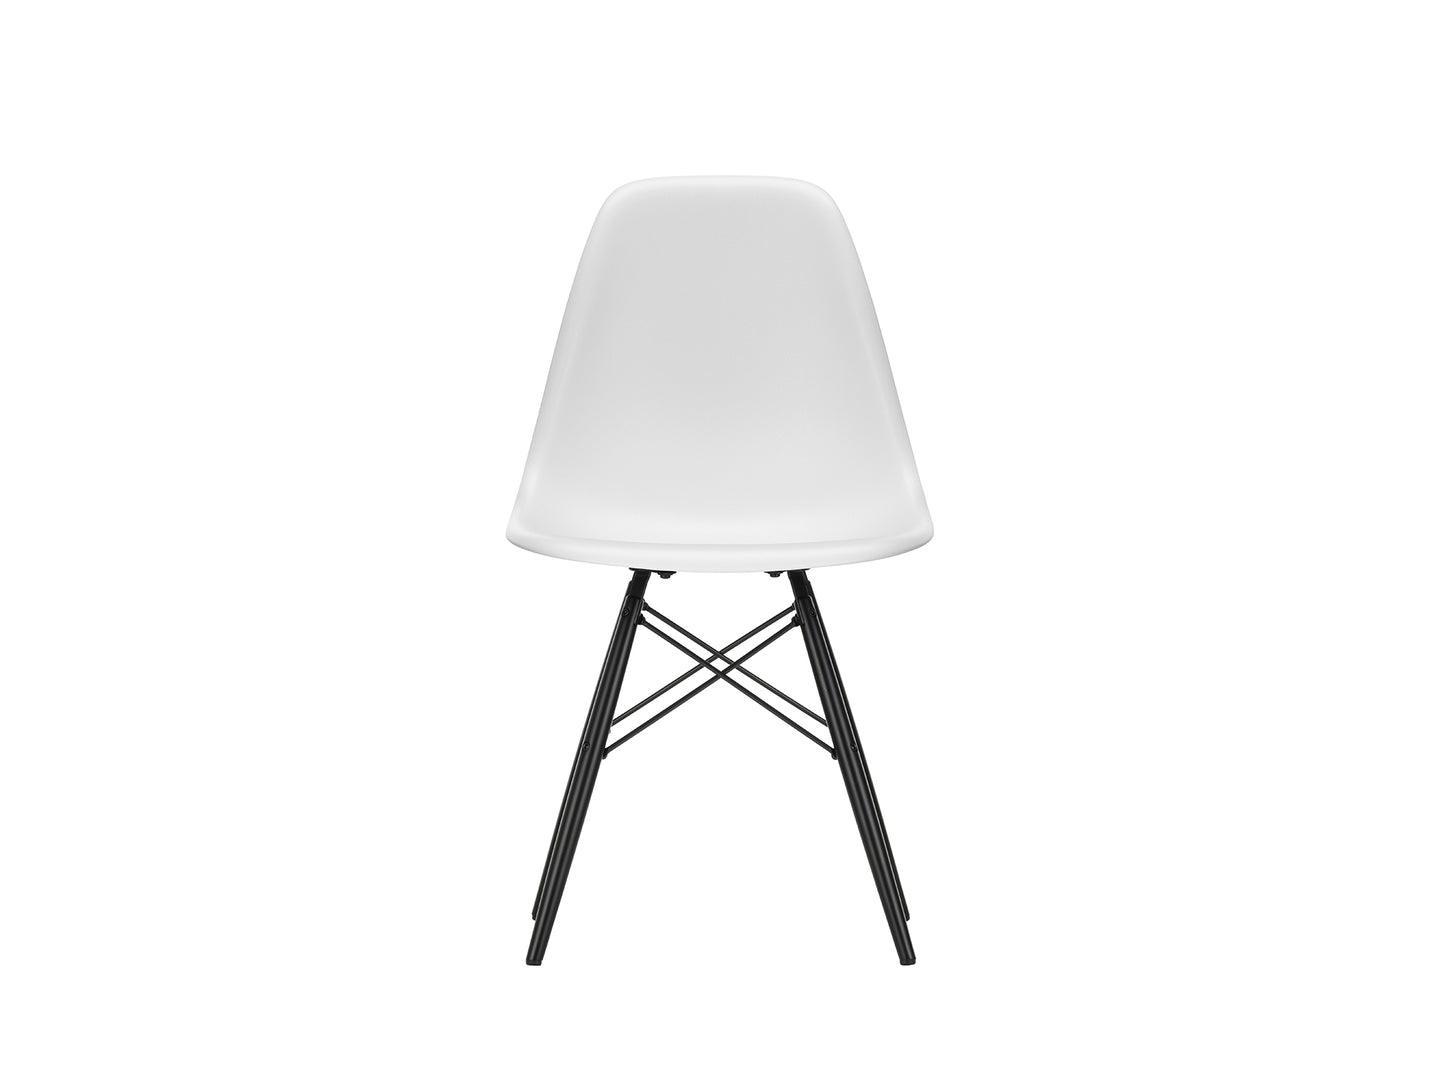 Vitra Eames DSW Plastic Side Chair - 85 Cotton White / Black Maple